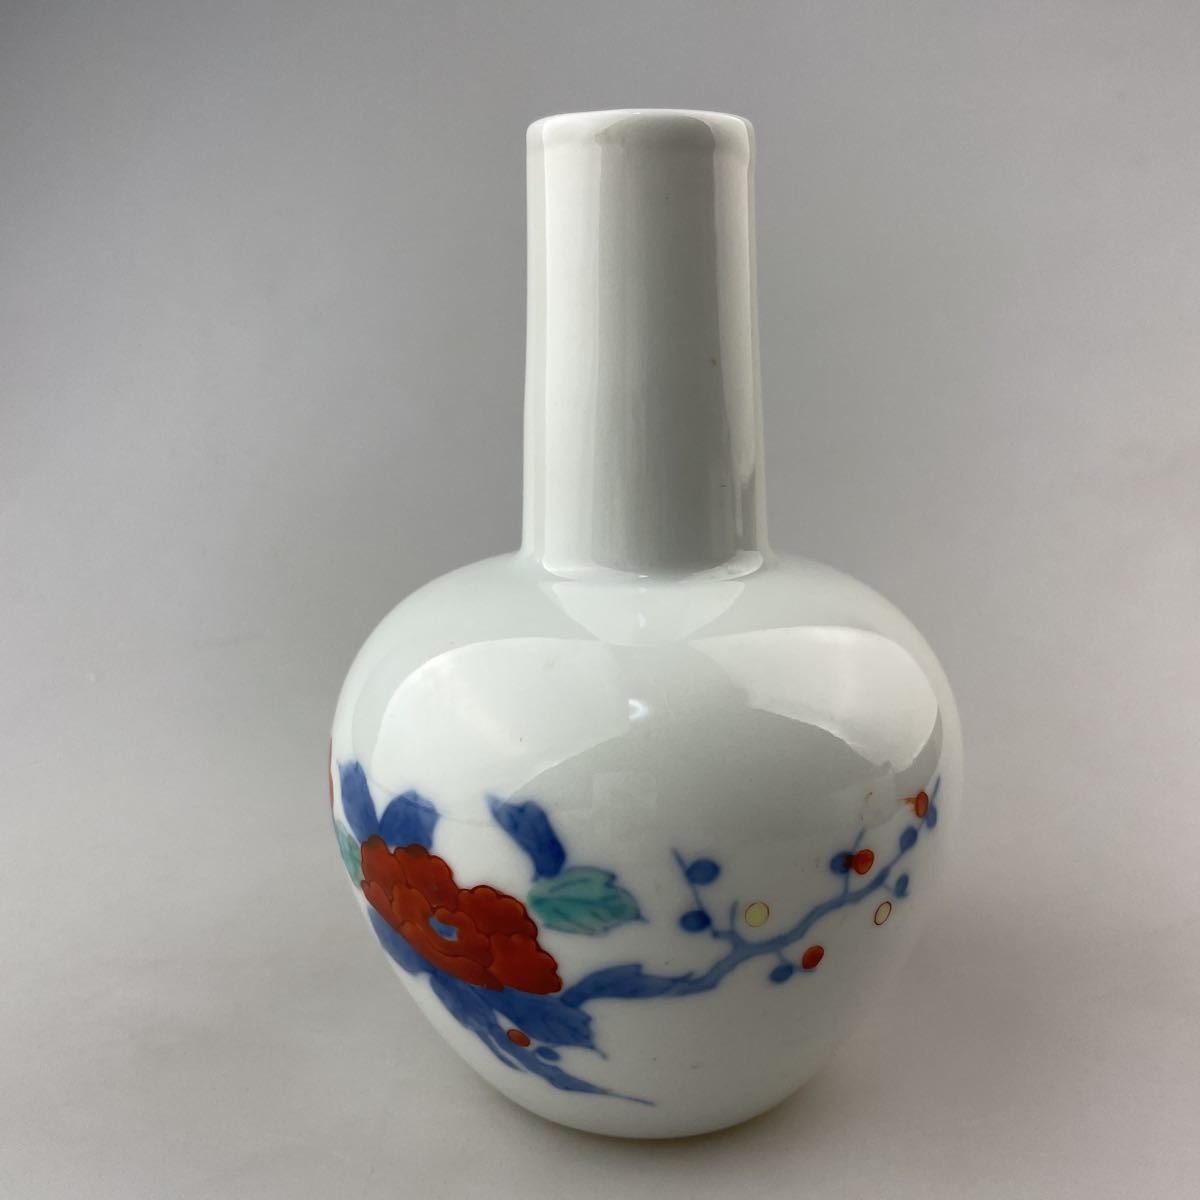 ヤフオク! -色鍋島 花瓶の中古品・新品・未使用品一覧